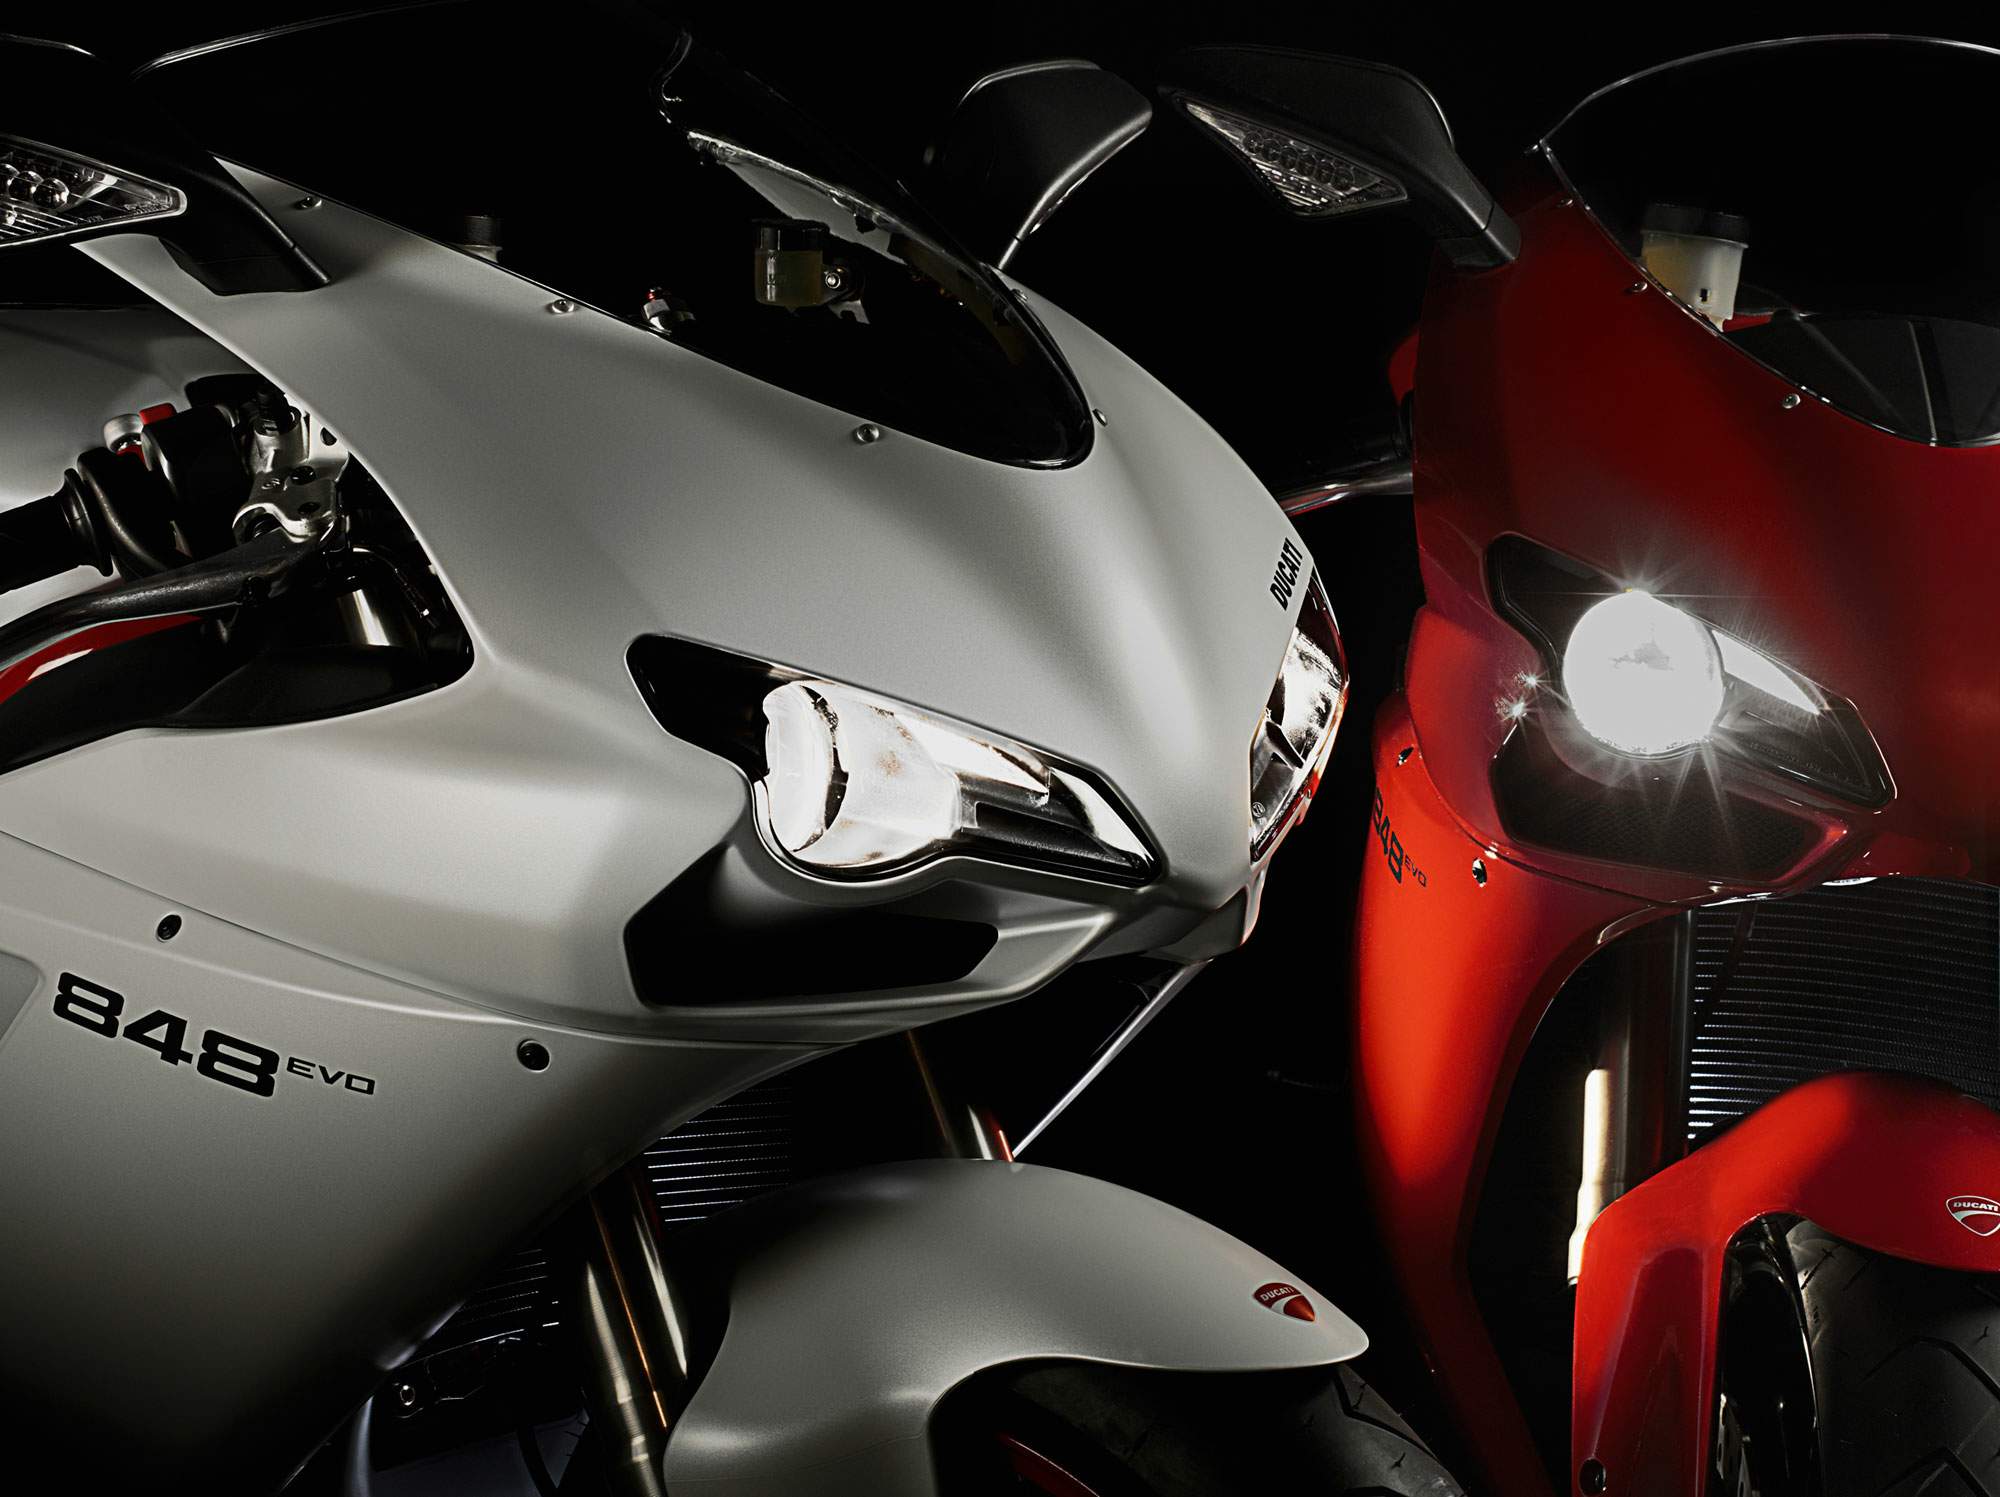 Мотоцикл Ducati 848 EVO 2013 фото